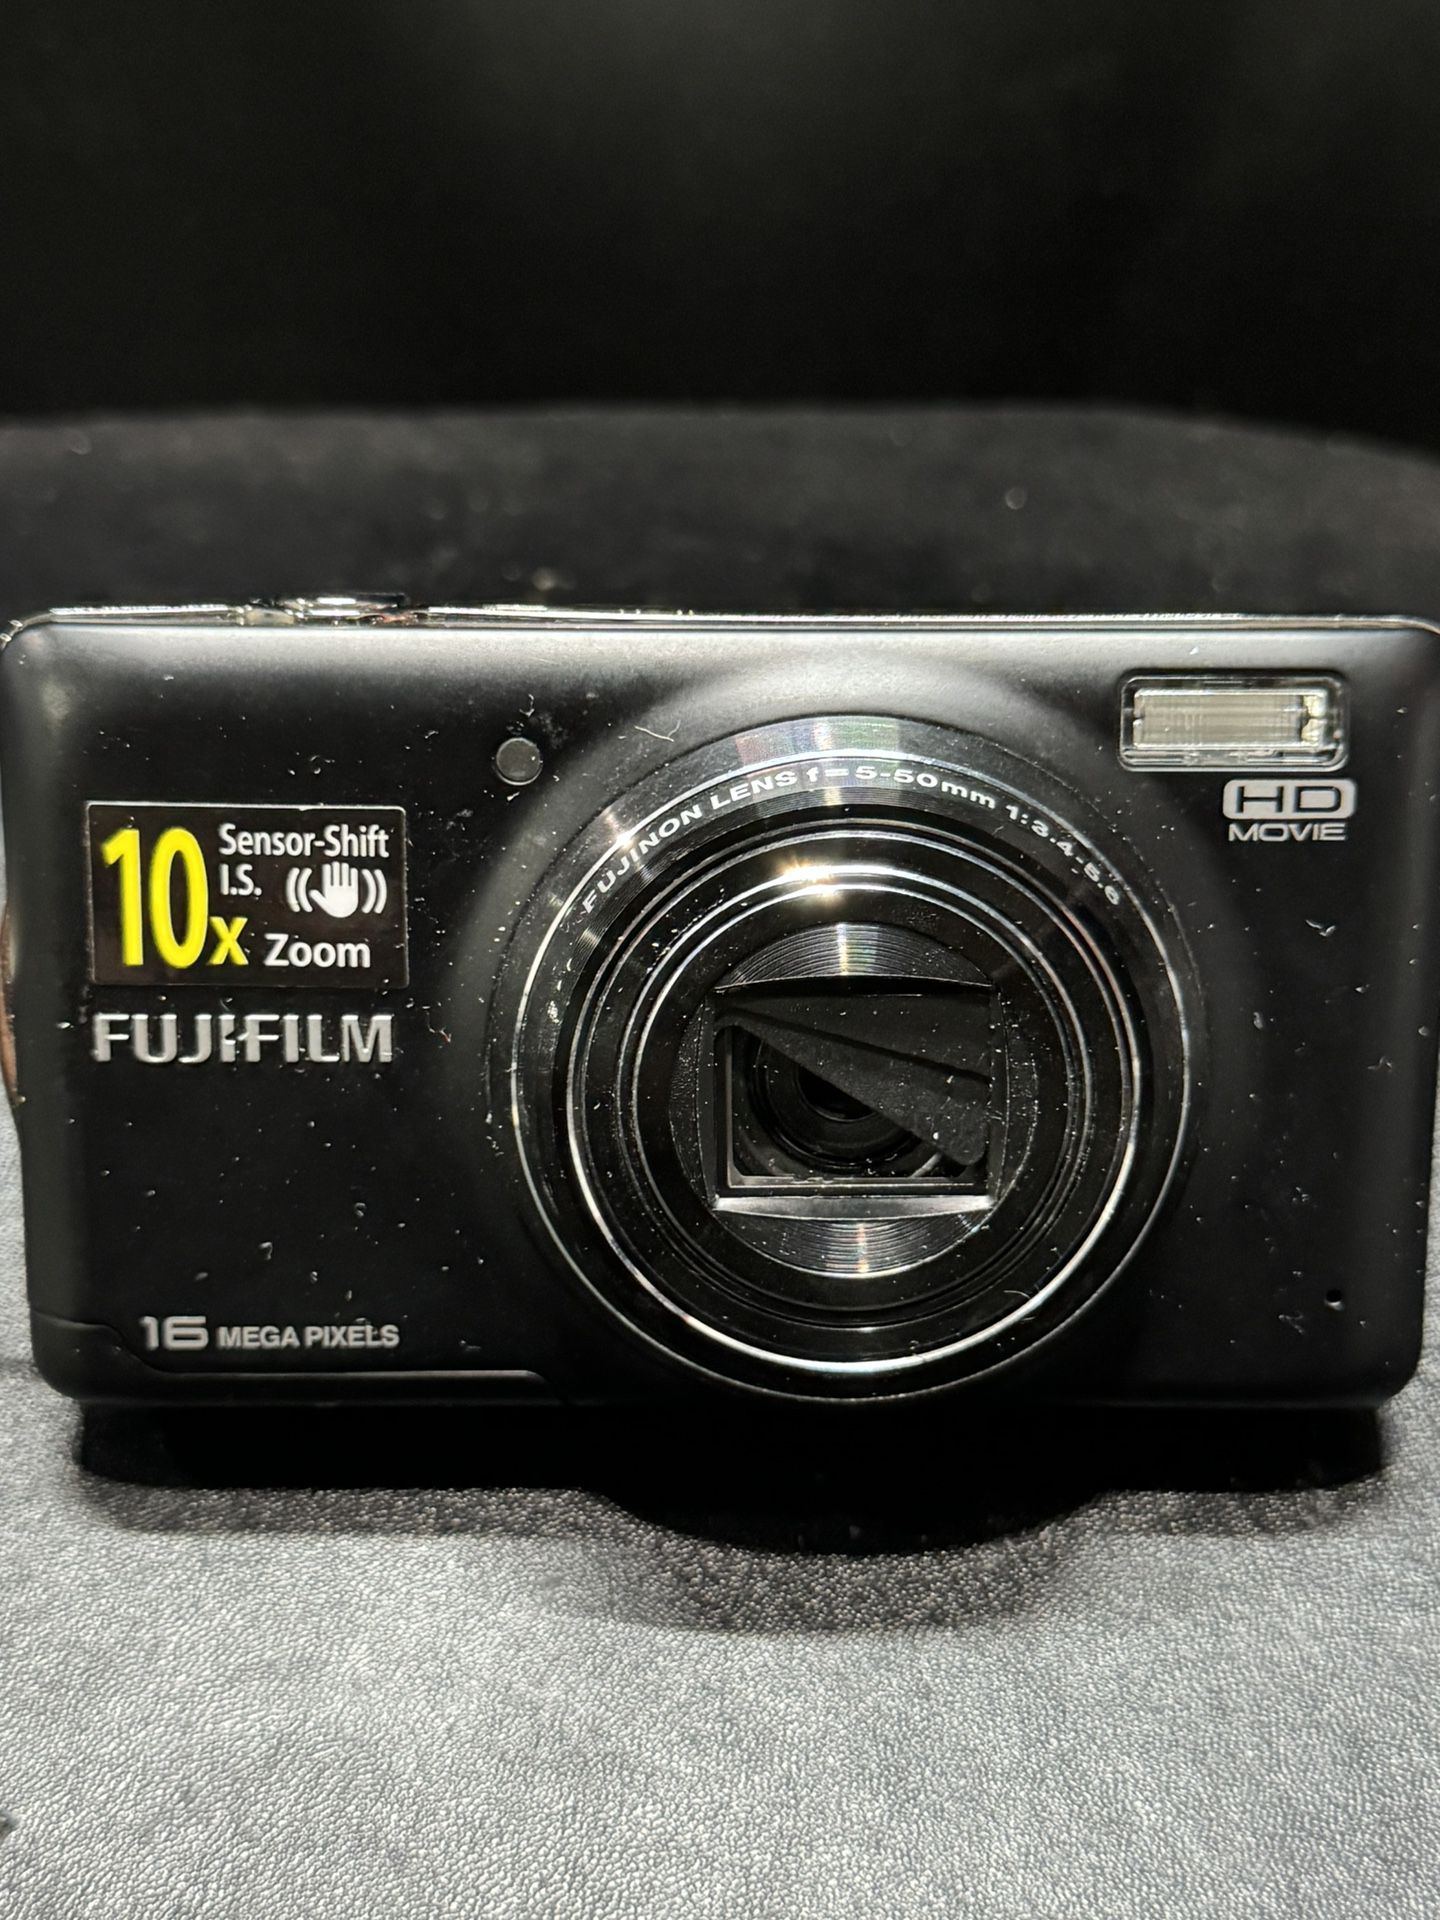 Fujifilm FinePix T400 Digital Camera